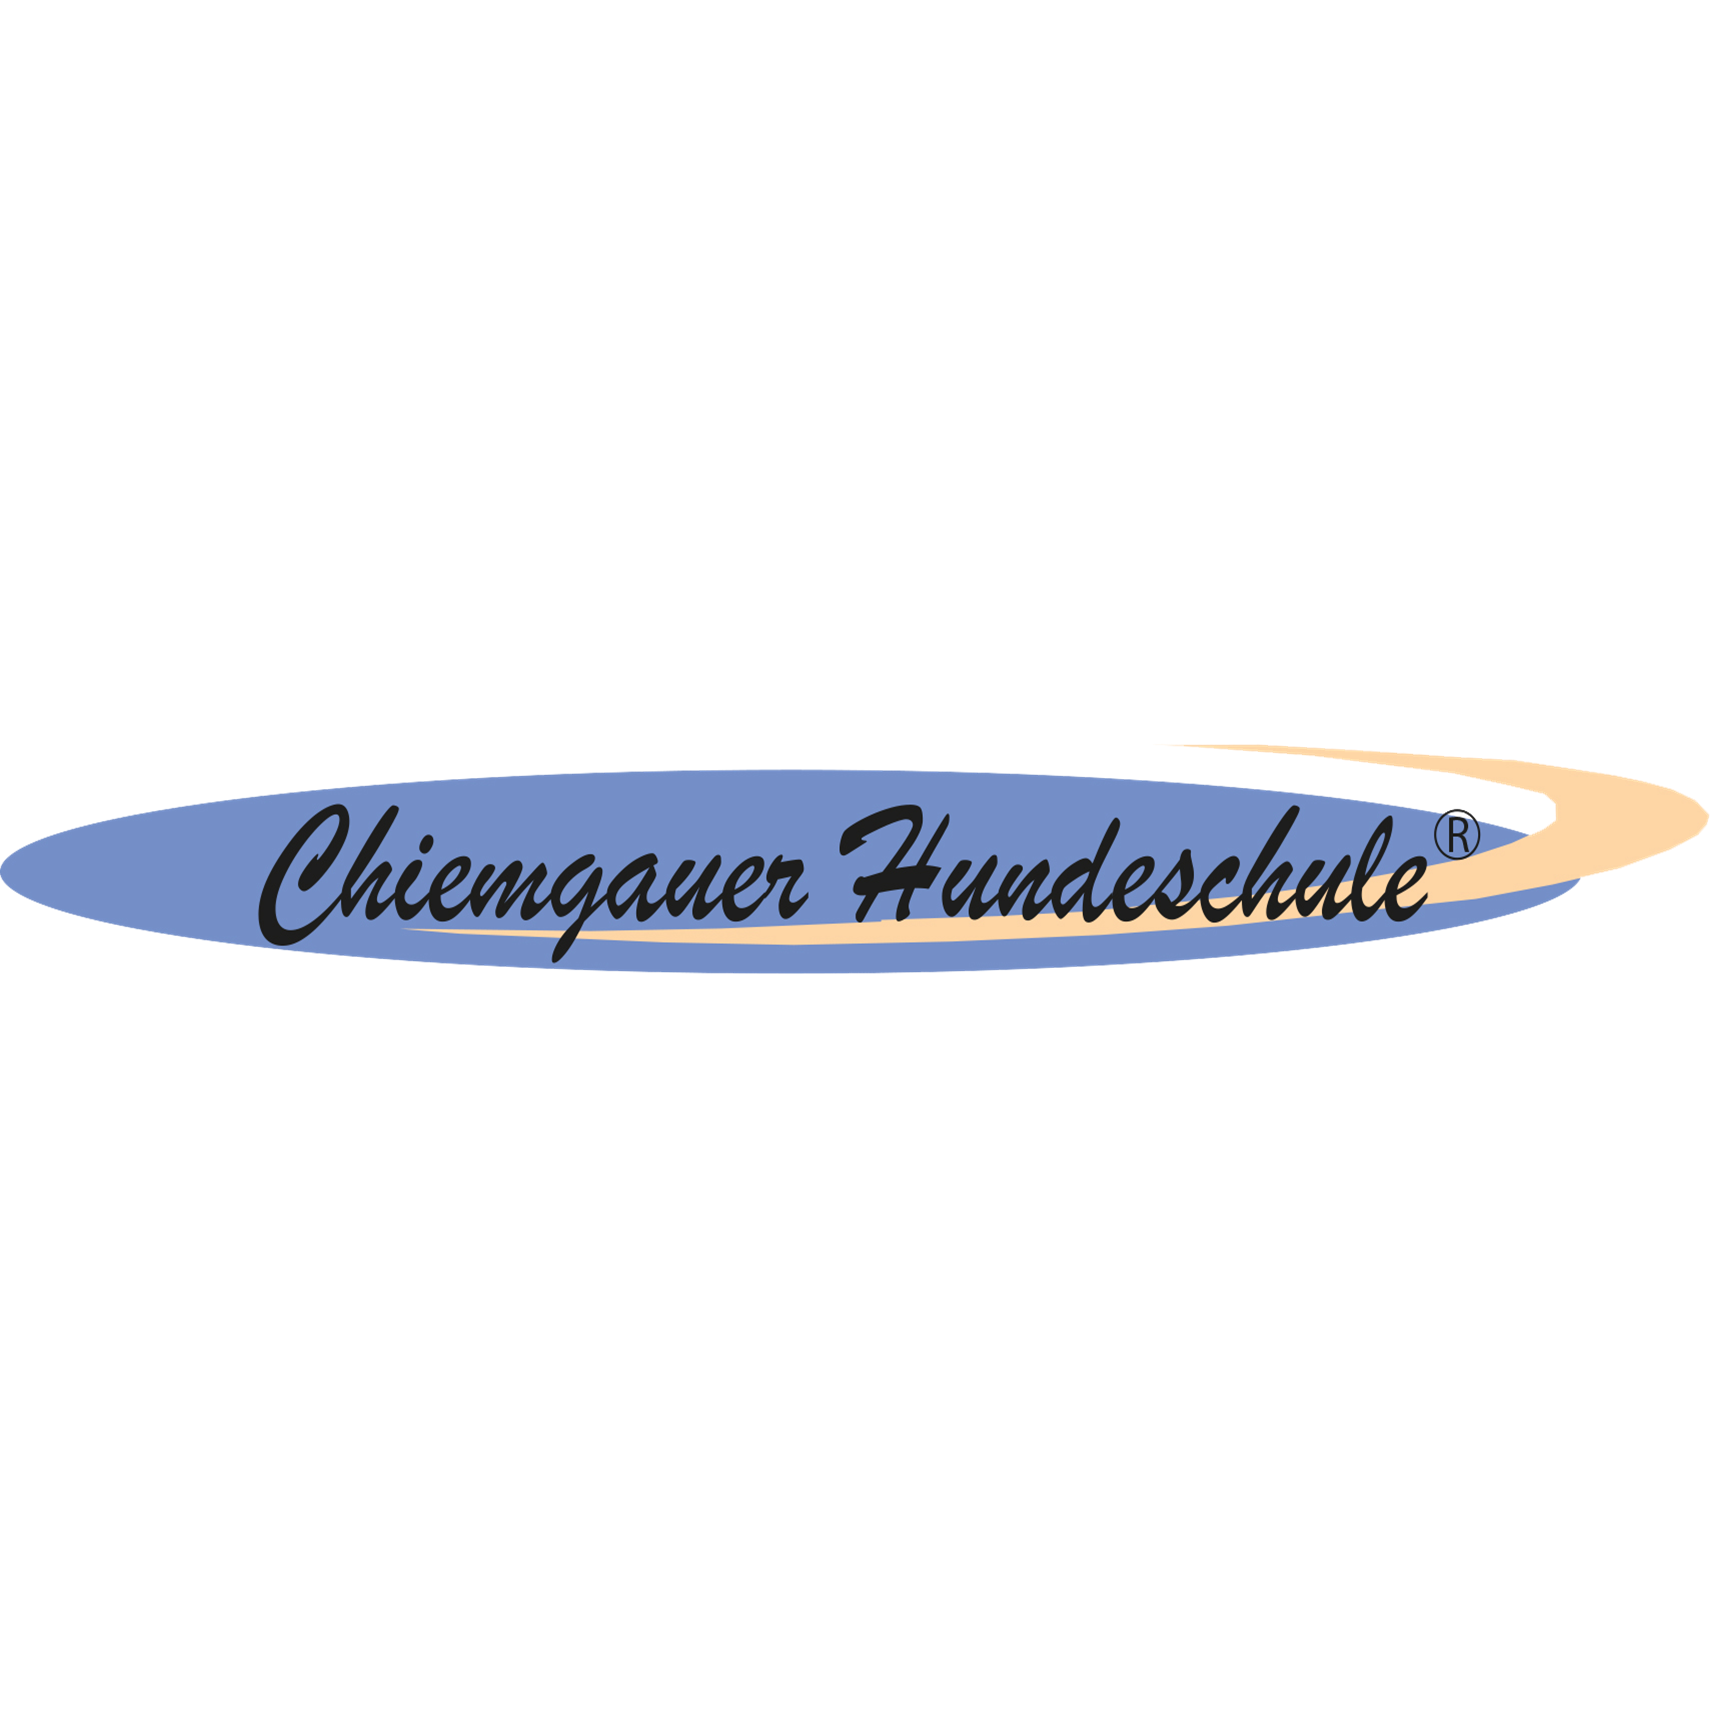 Chiemgauer Hundeschule in Trostberg - Logo